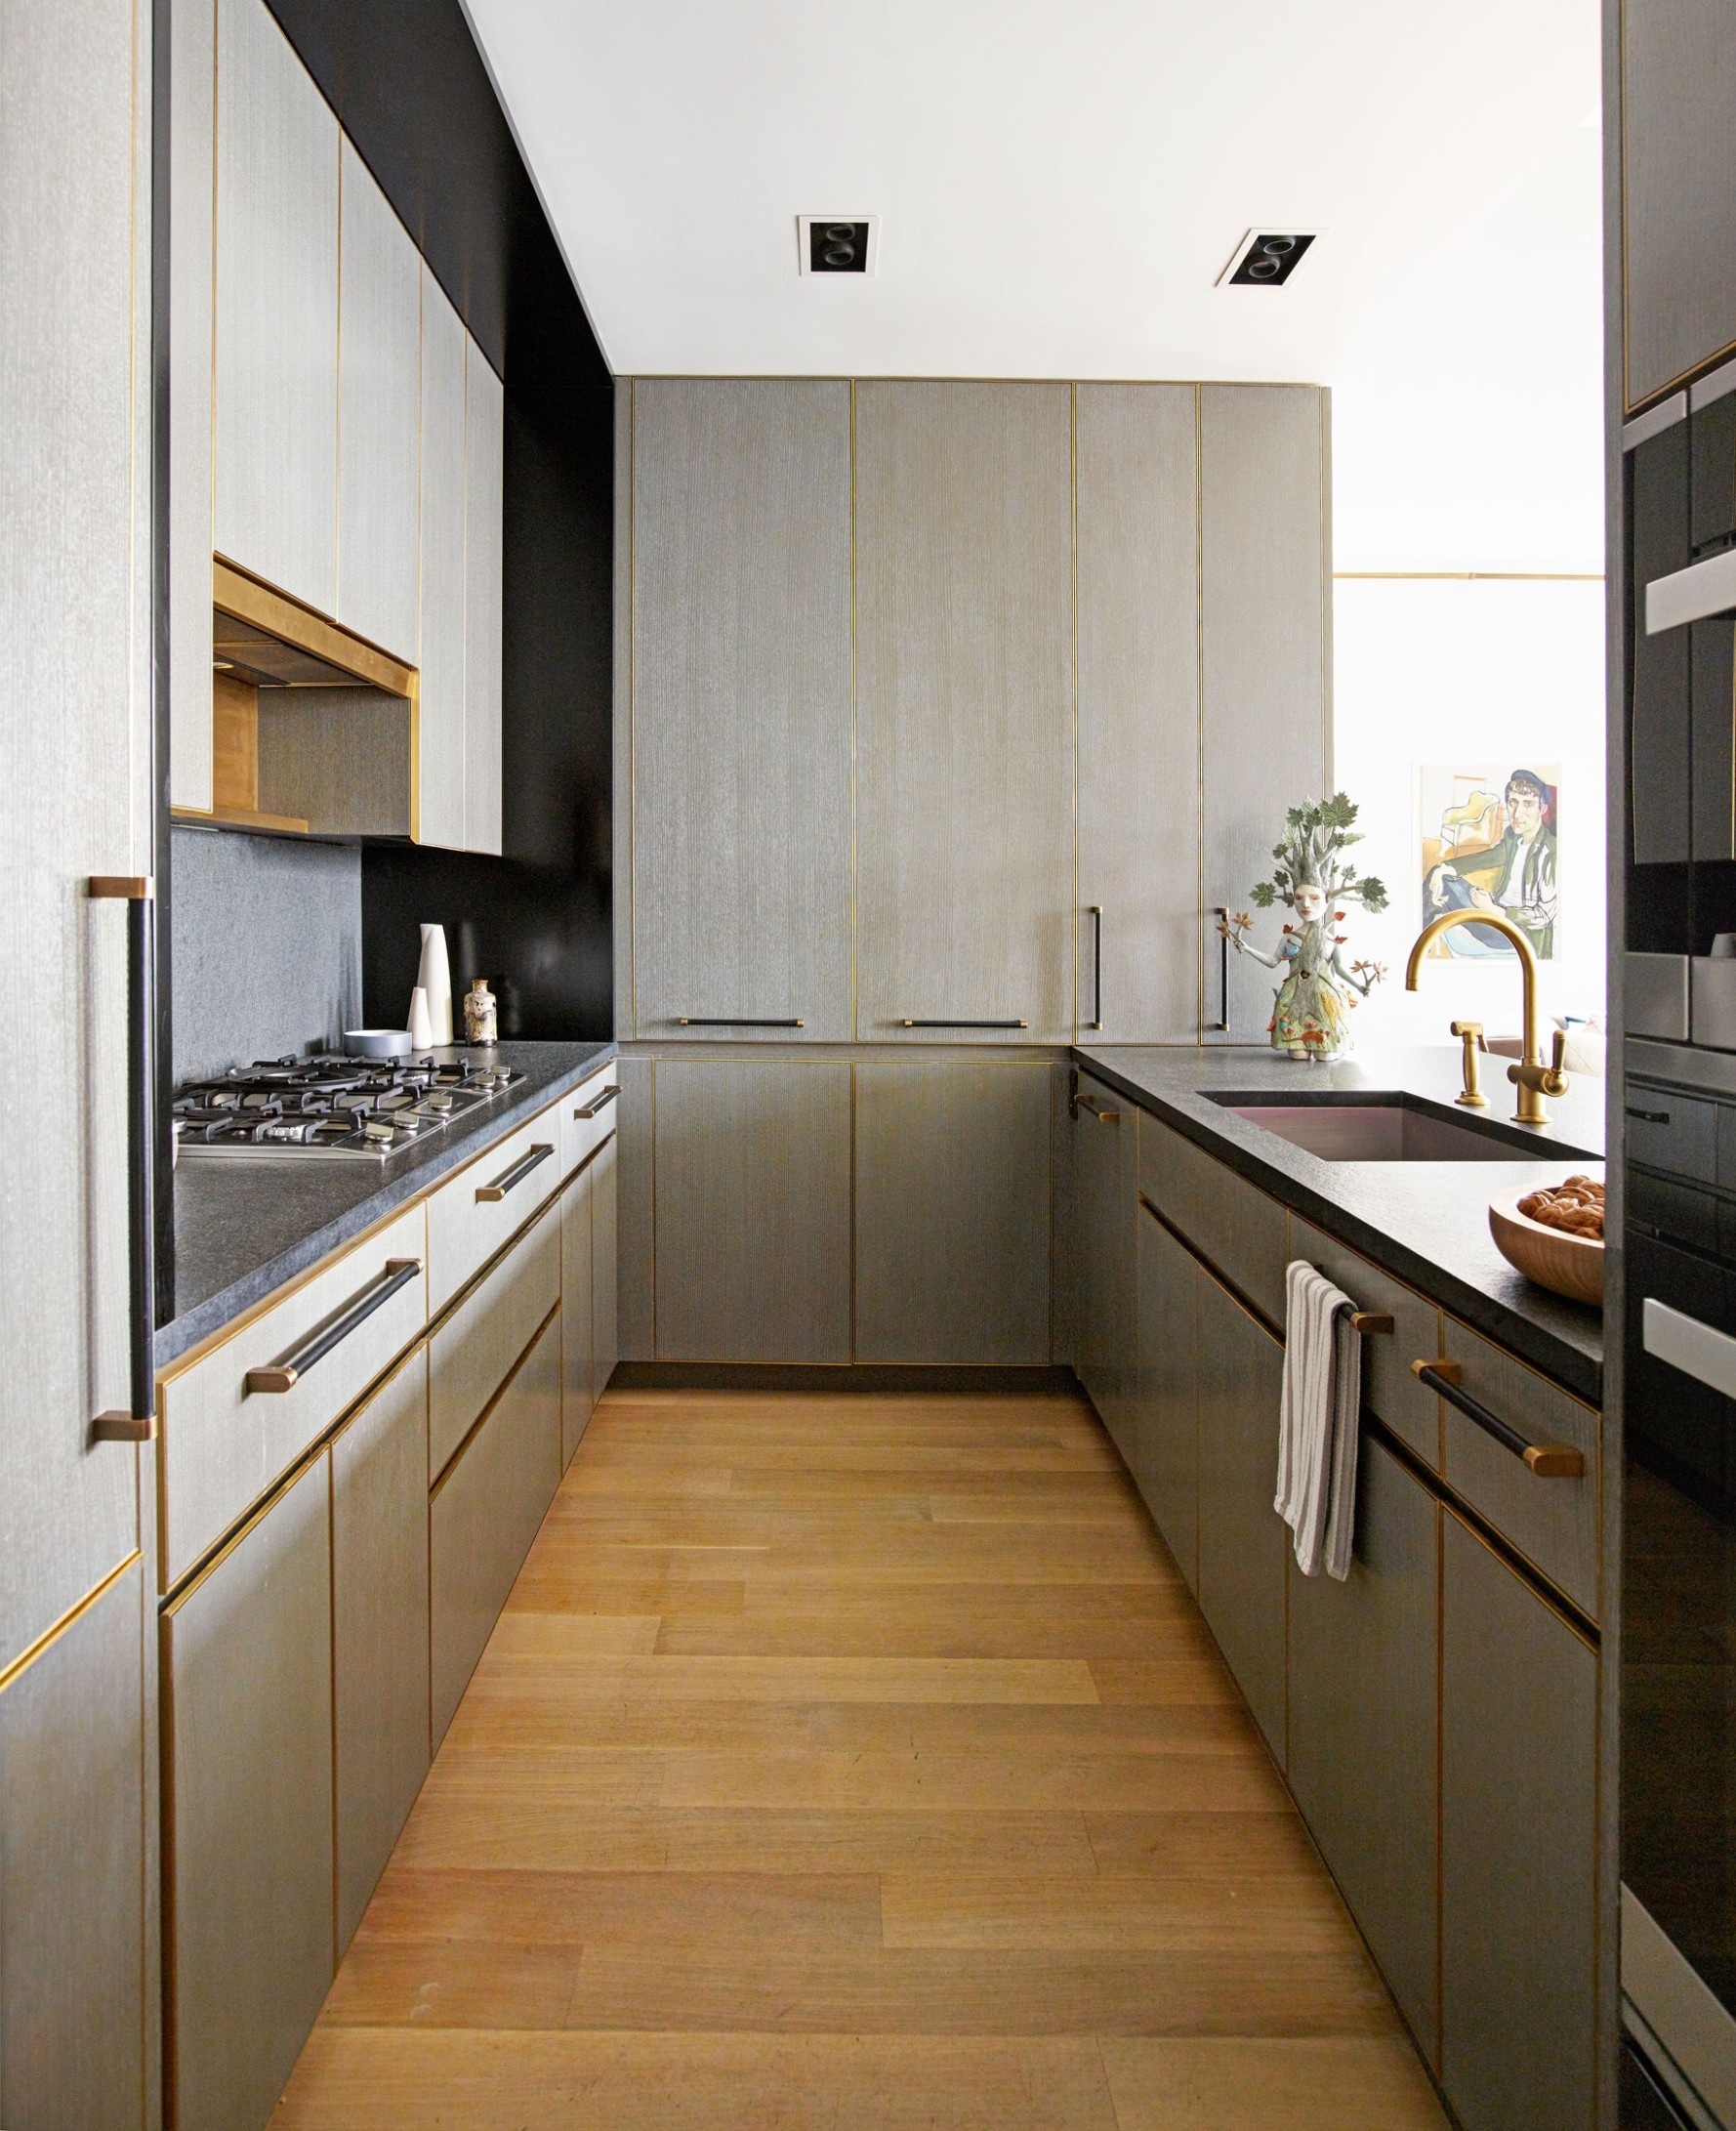 Small Galley Kitchen Ideas & Design Inspiration  Architectural Digest - small kitchen planner